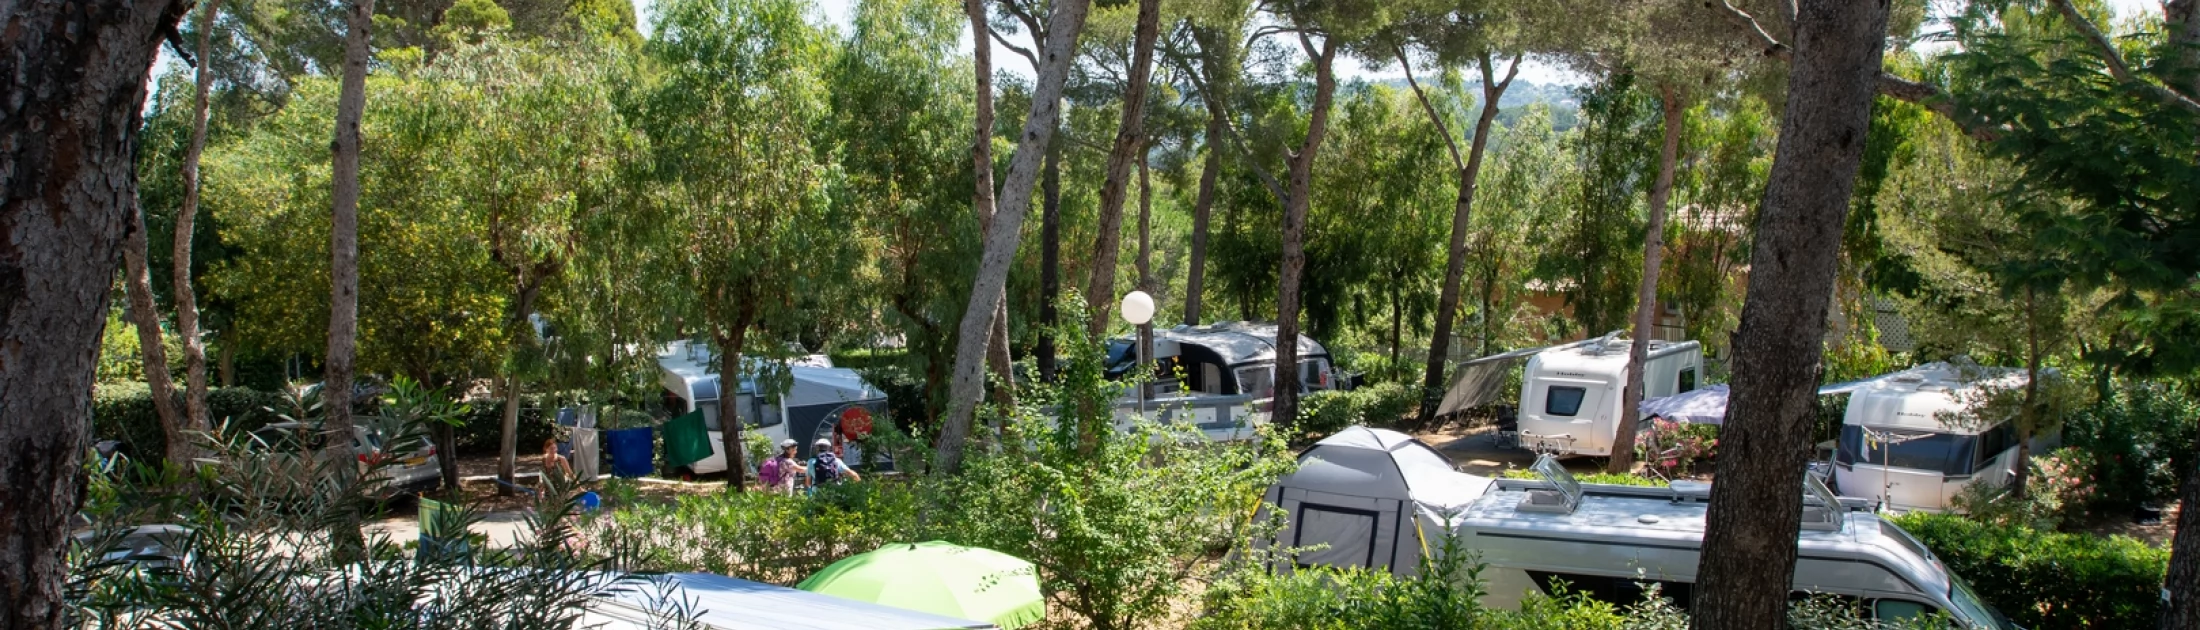 Place of campsite